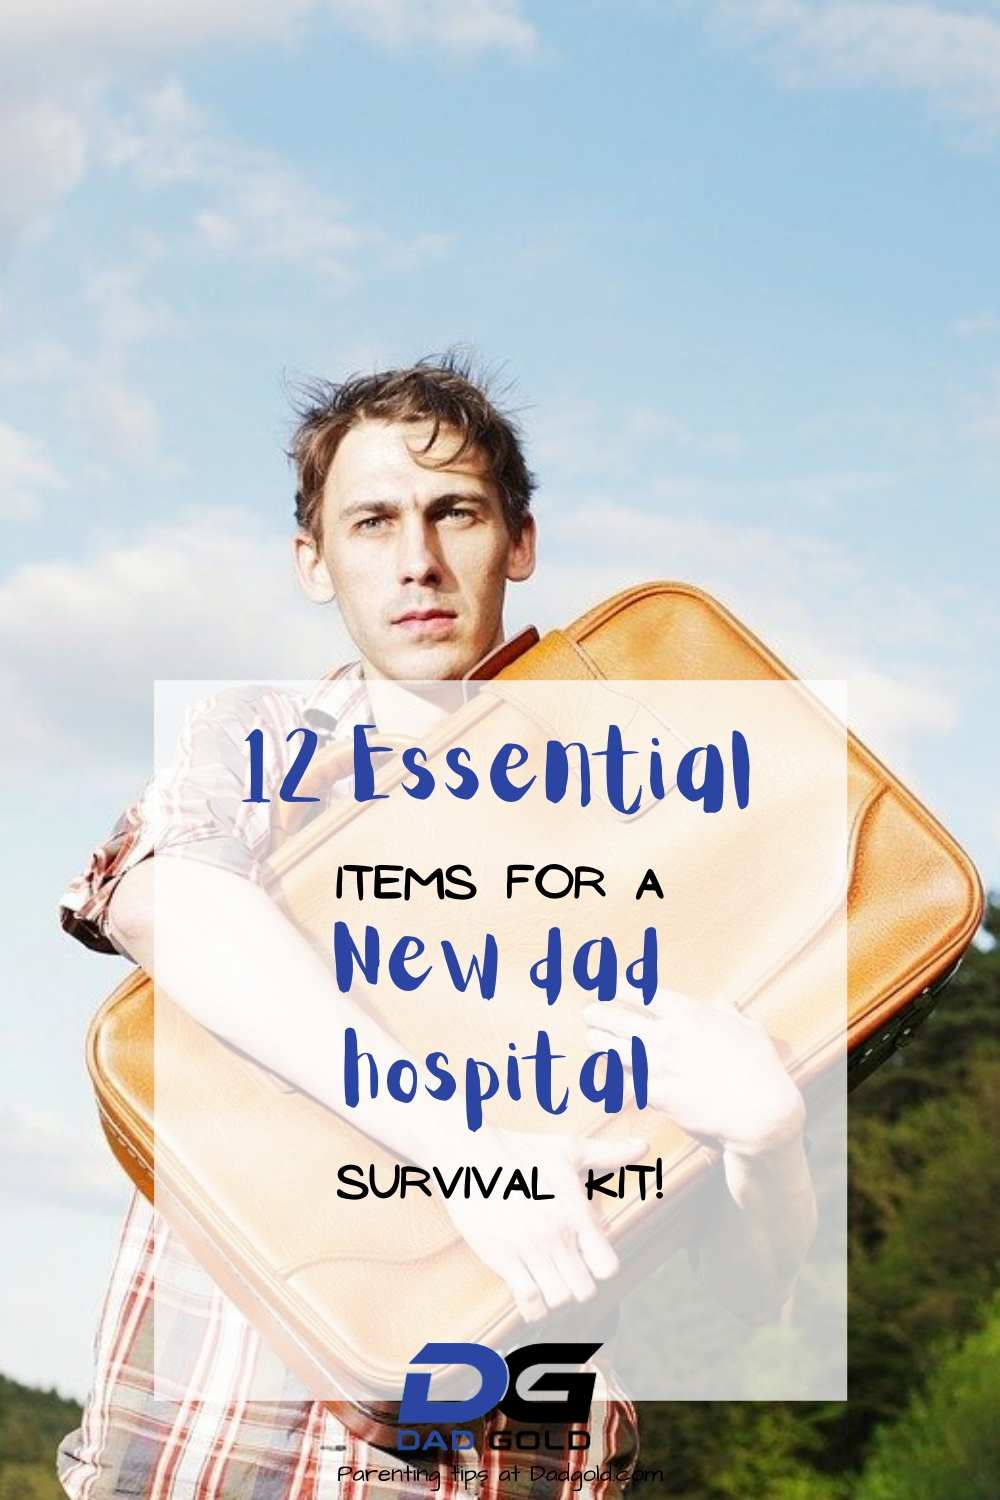 new dad hospital survival kit